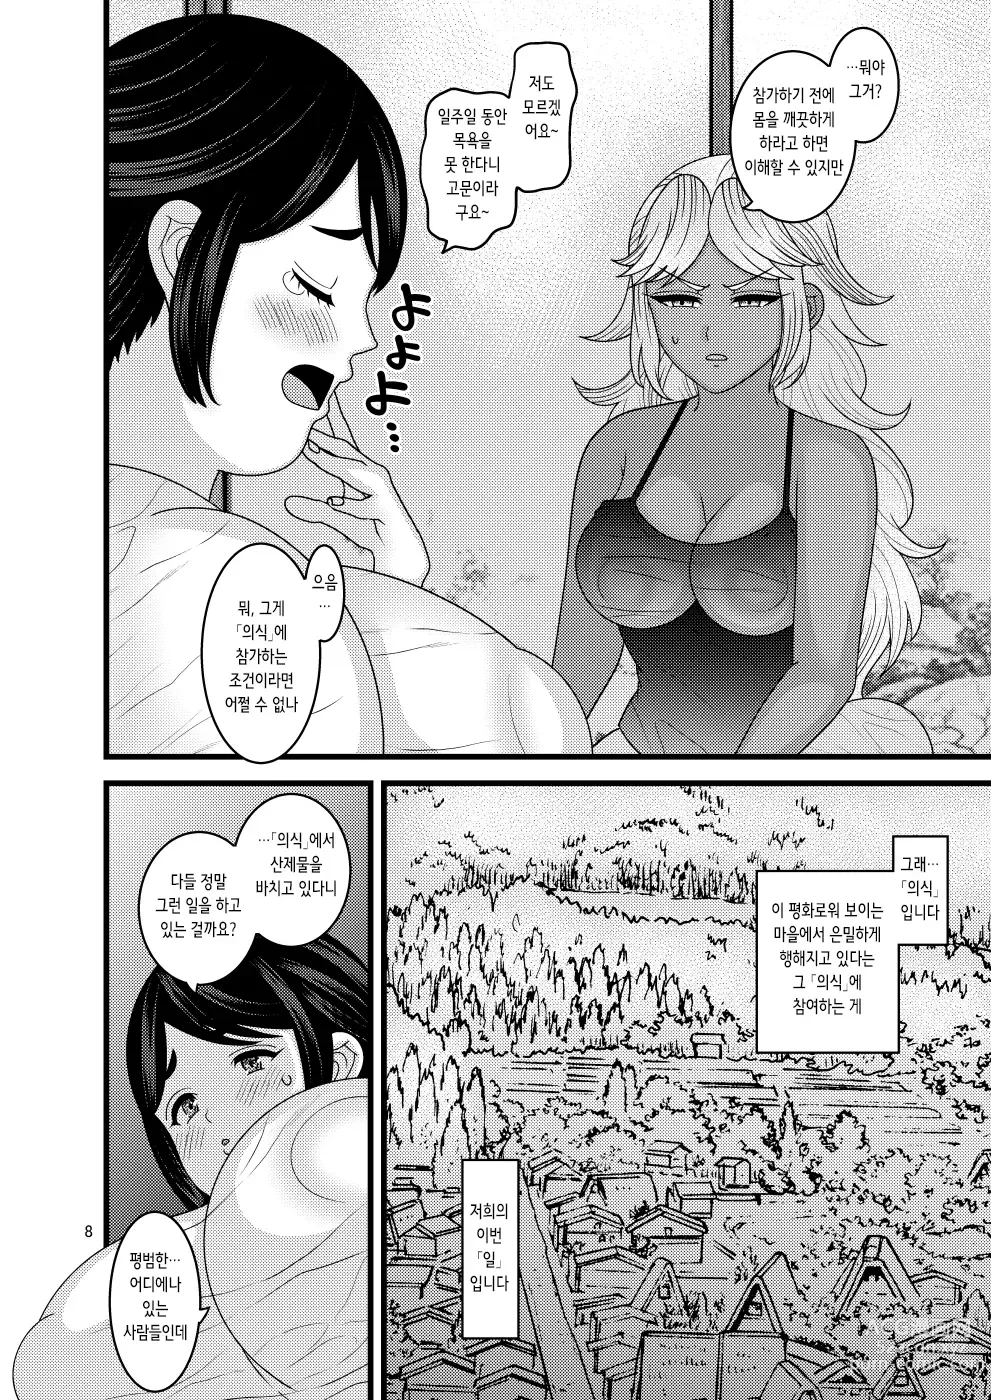 Page 9 of doujinshi 떨어지는 꽃 보탄과 키쿄우 편